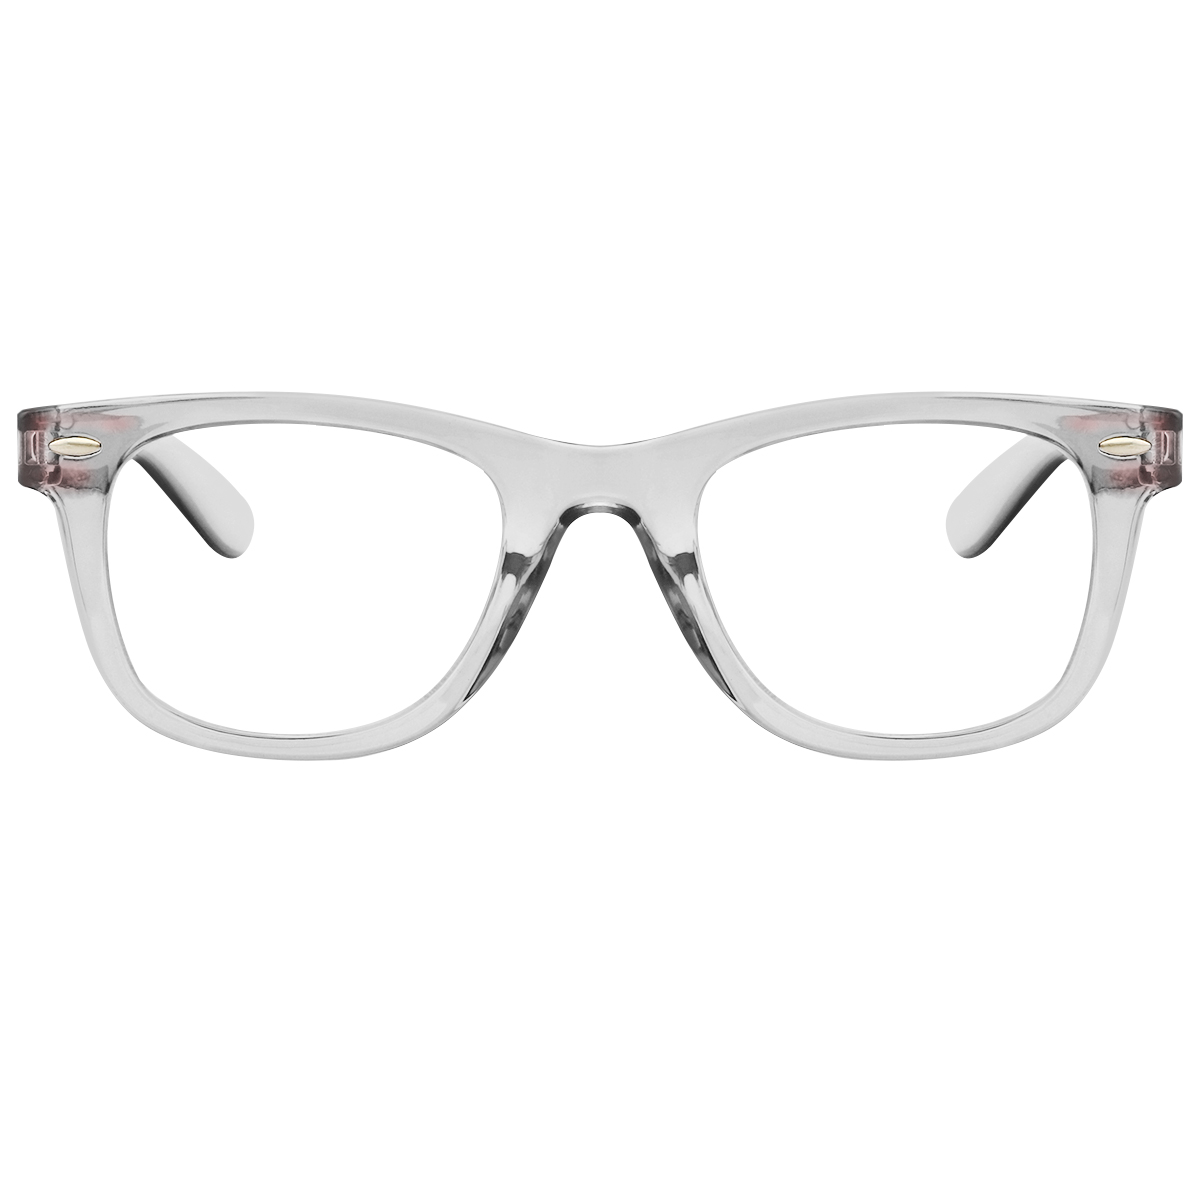 square reading-glasses #552 - transparent-red